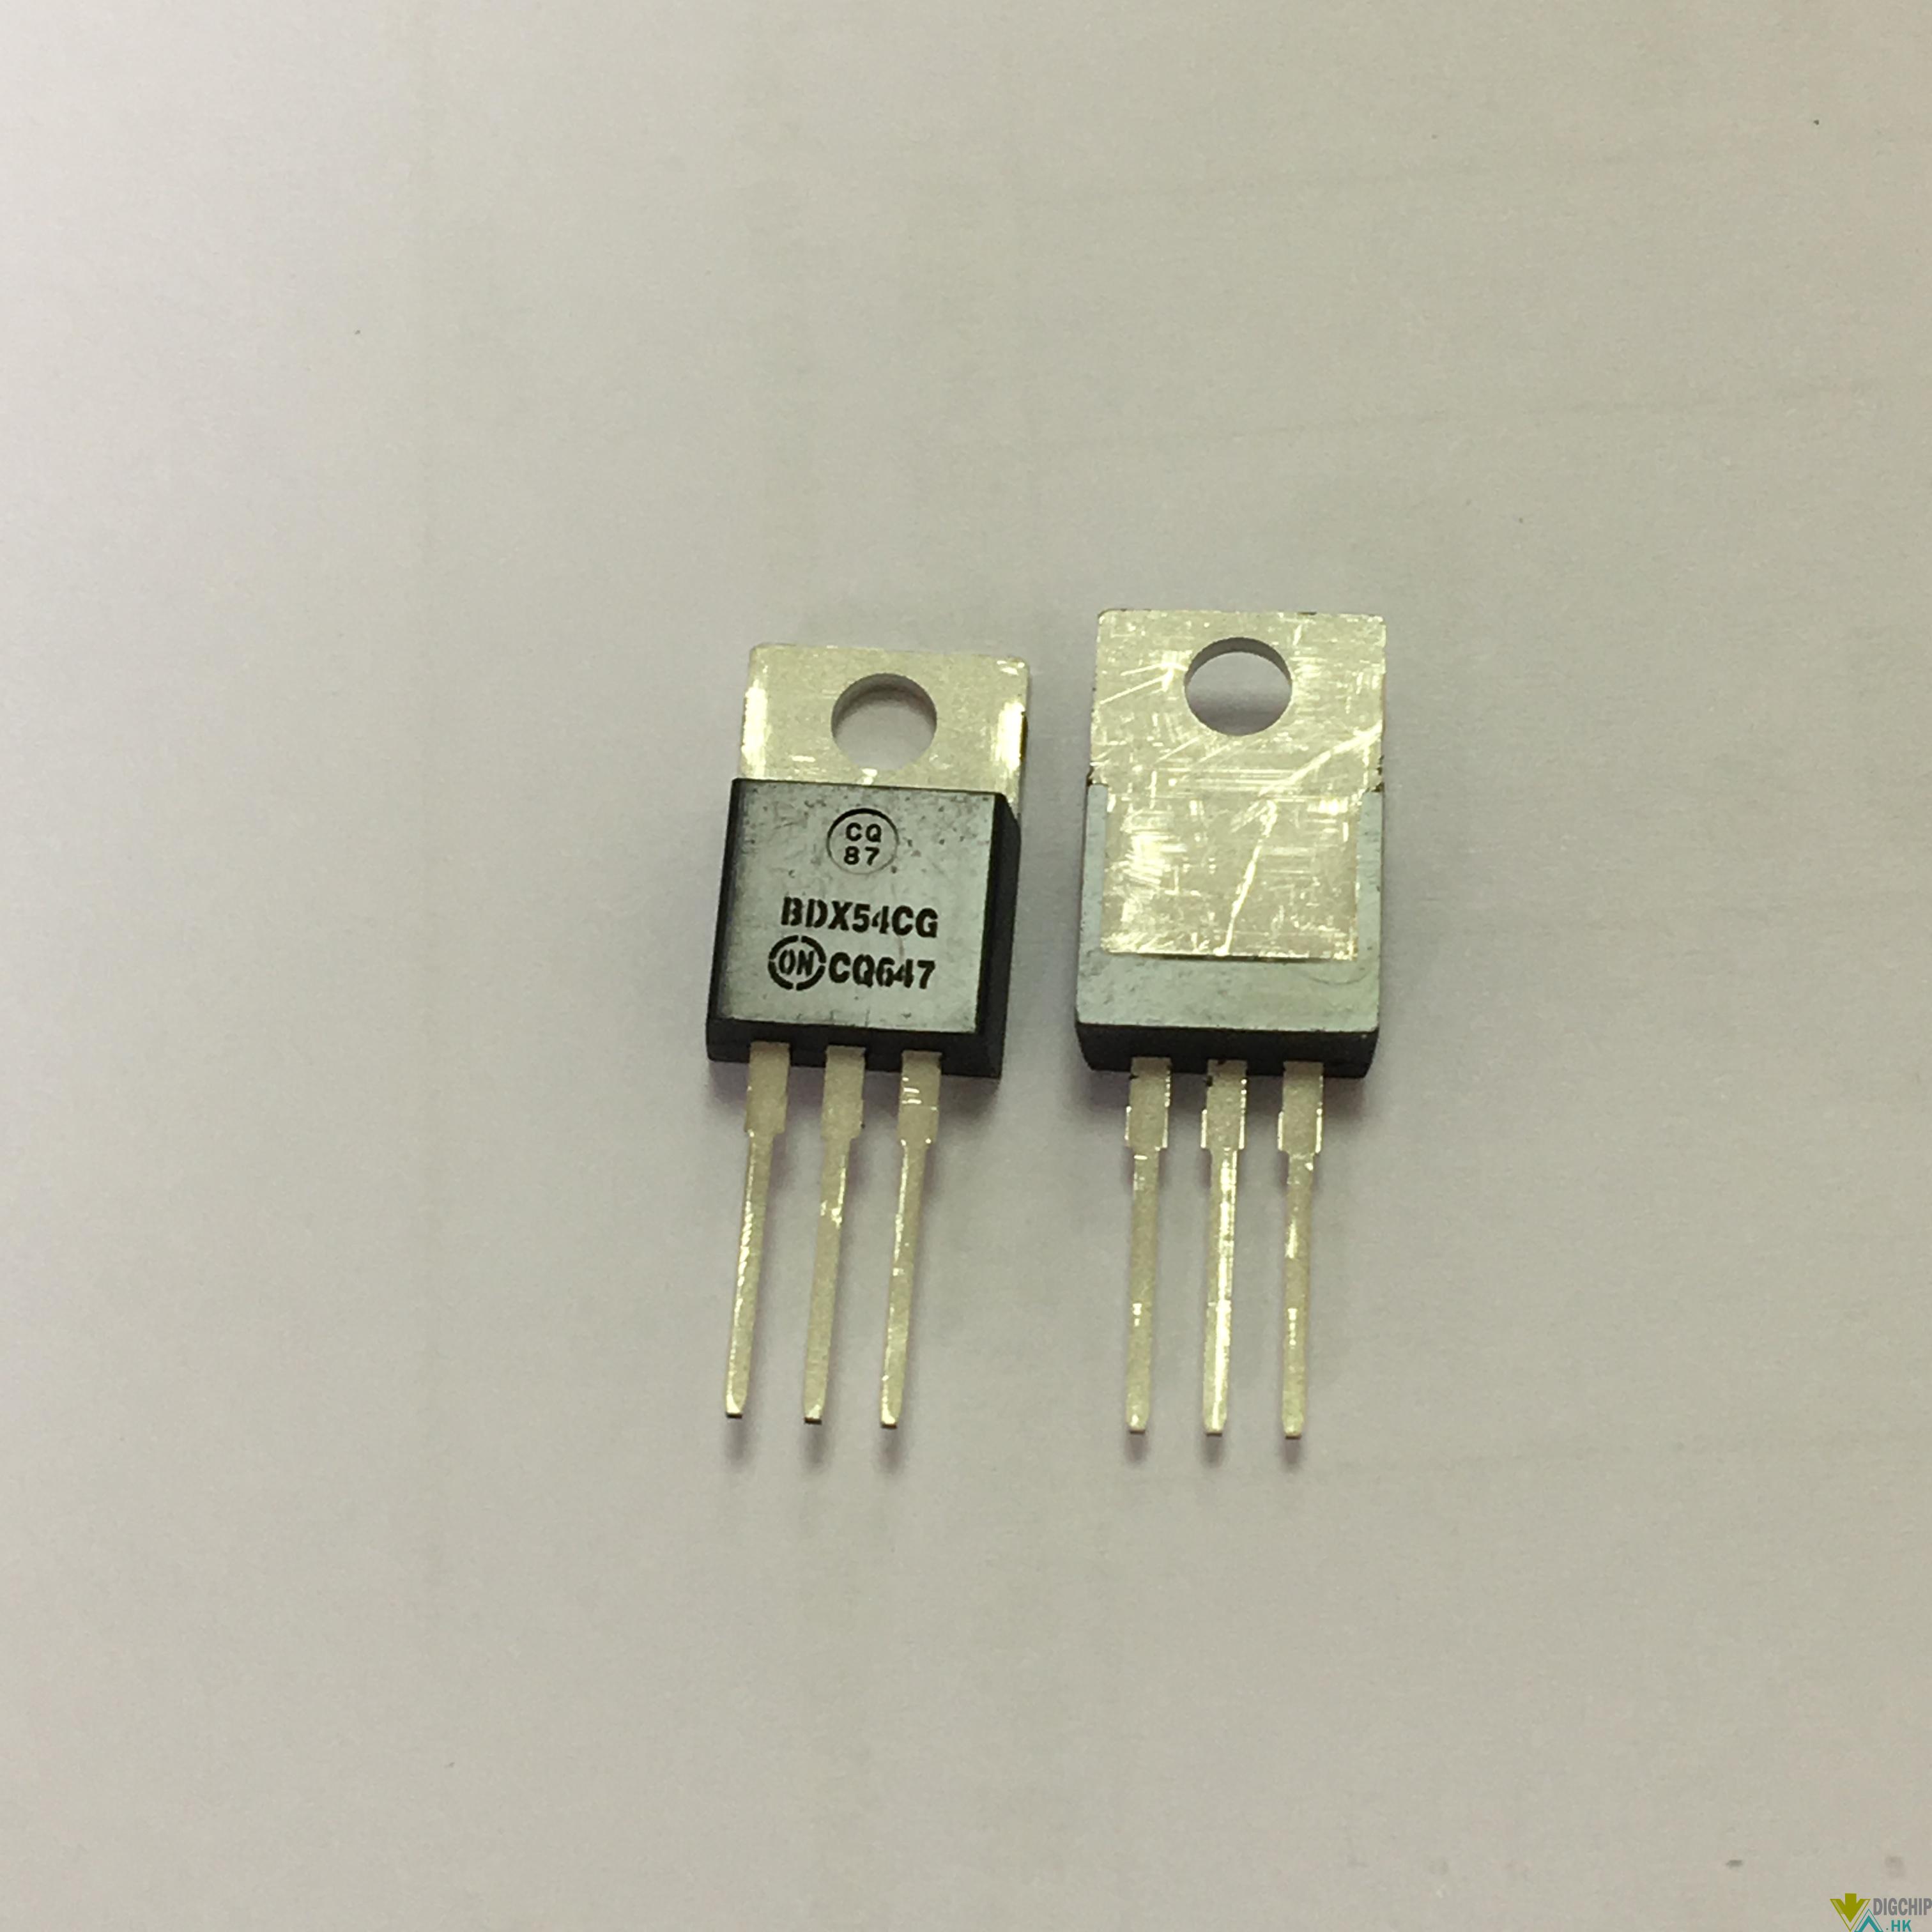 Plastic Medium-Power Complementary Silicon Transistors